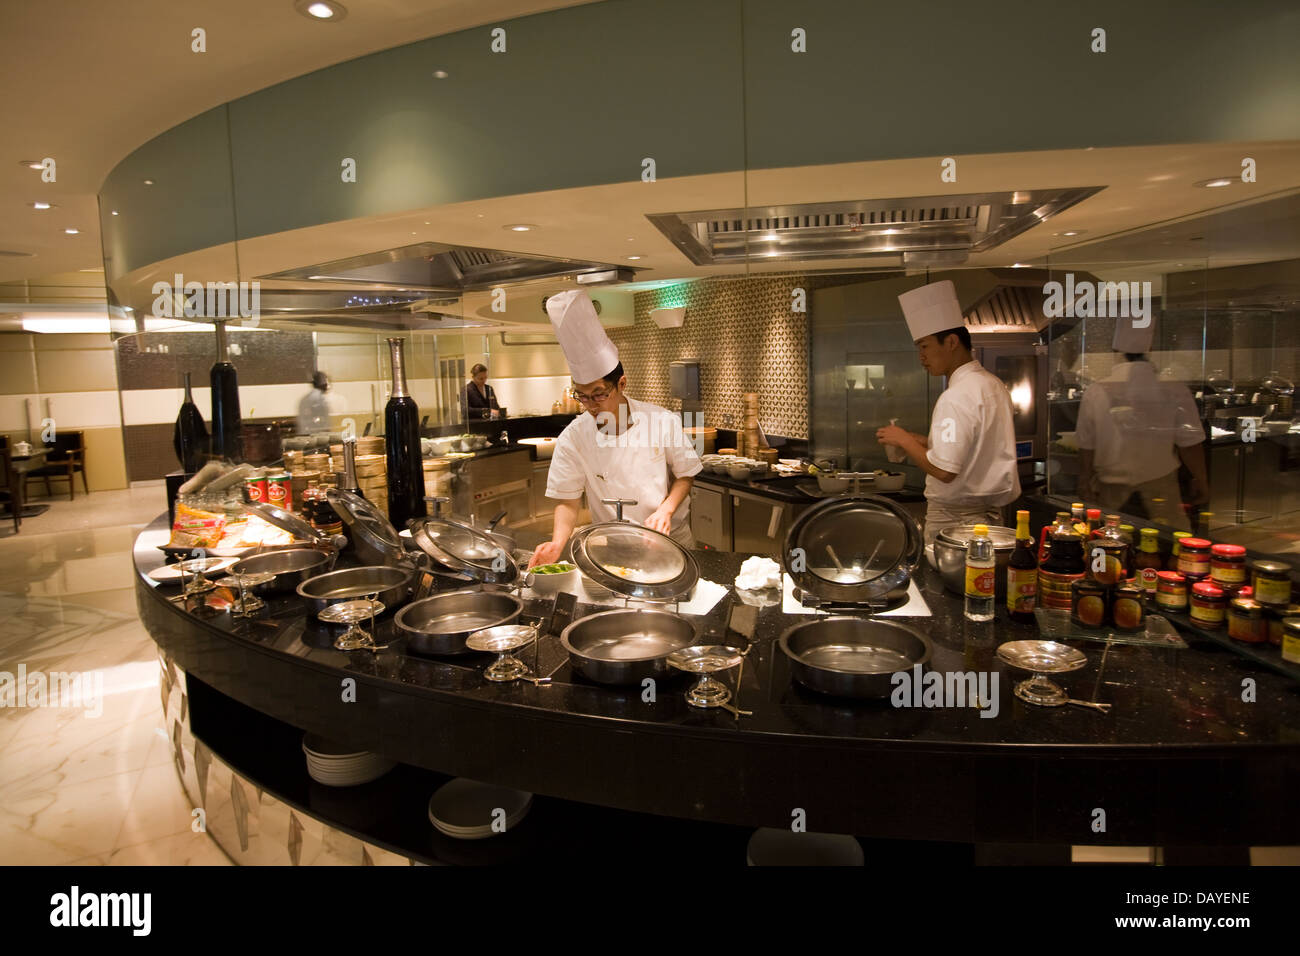 The Jun Sui Asian restaurant features a dazzling demonstration kitchen